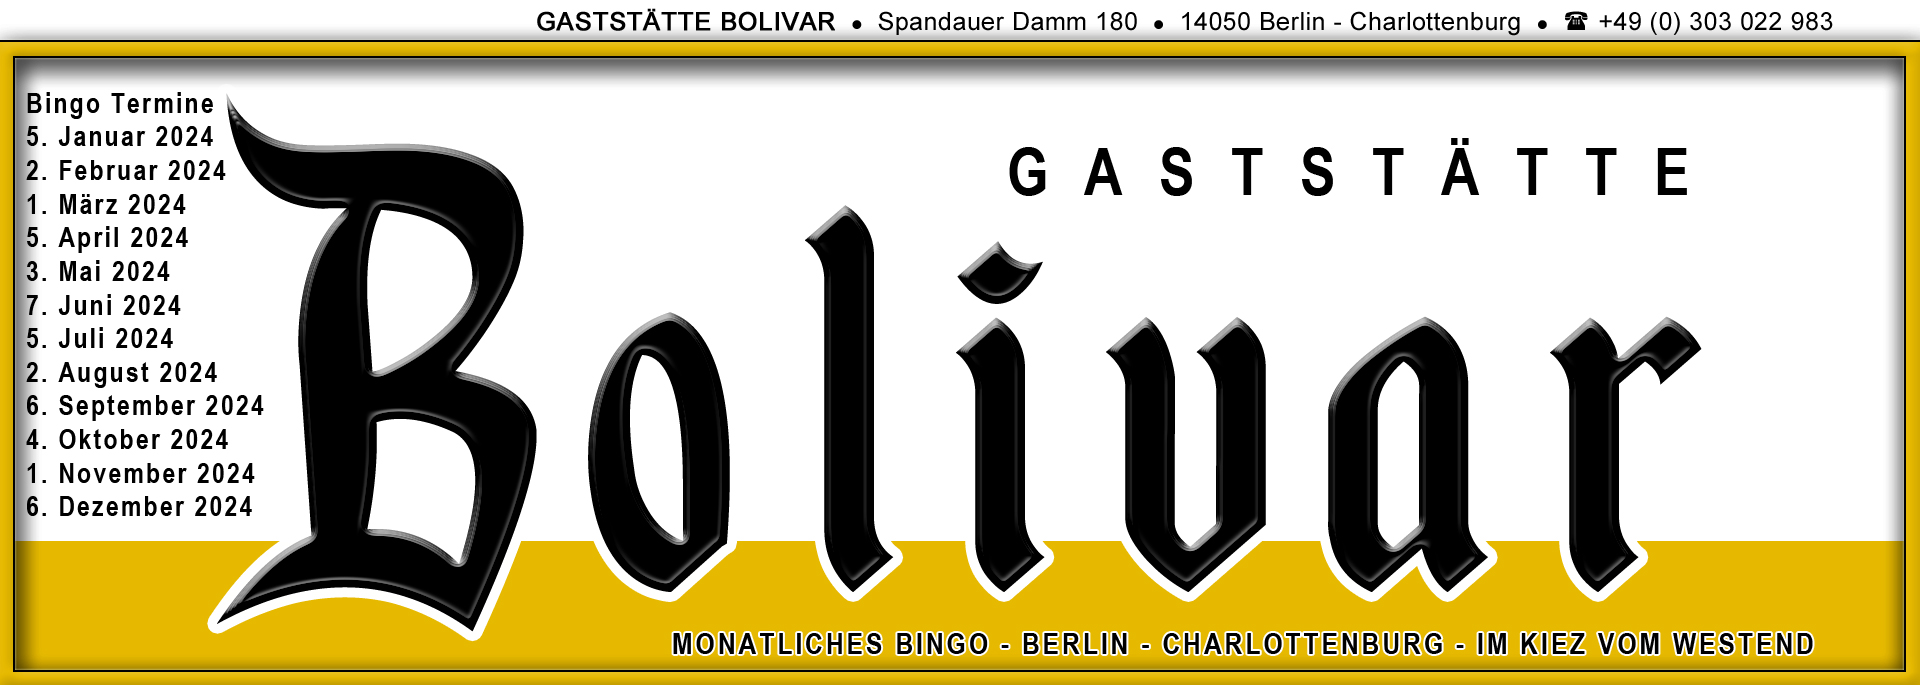 bolivar-berlin-charlottenburg-westend-bingo-2024